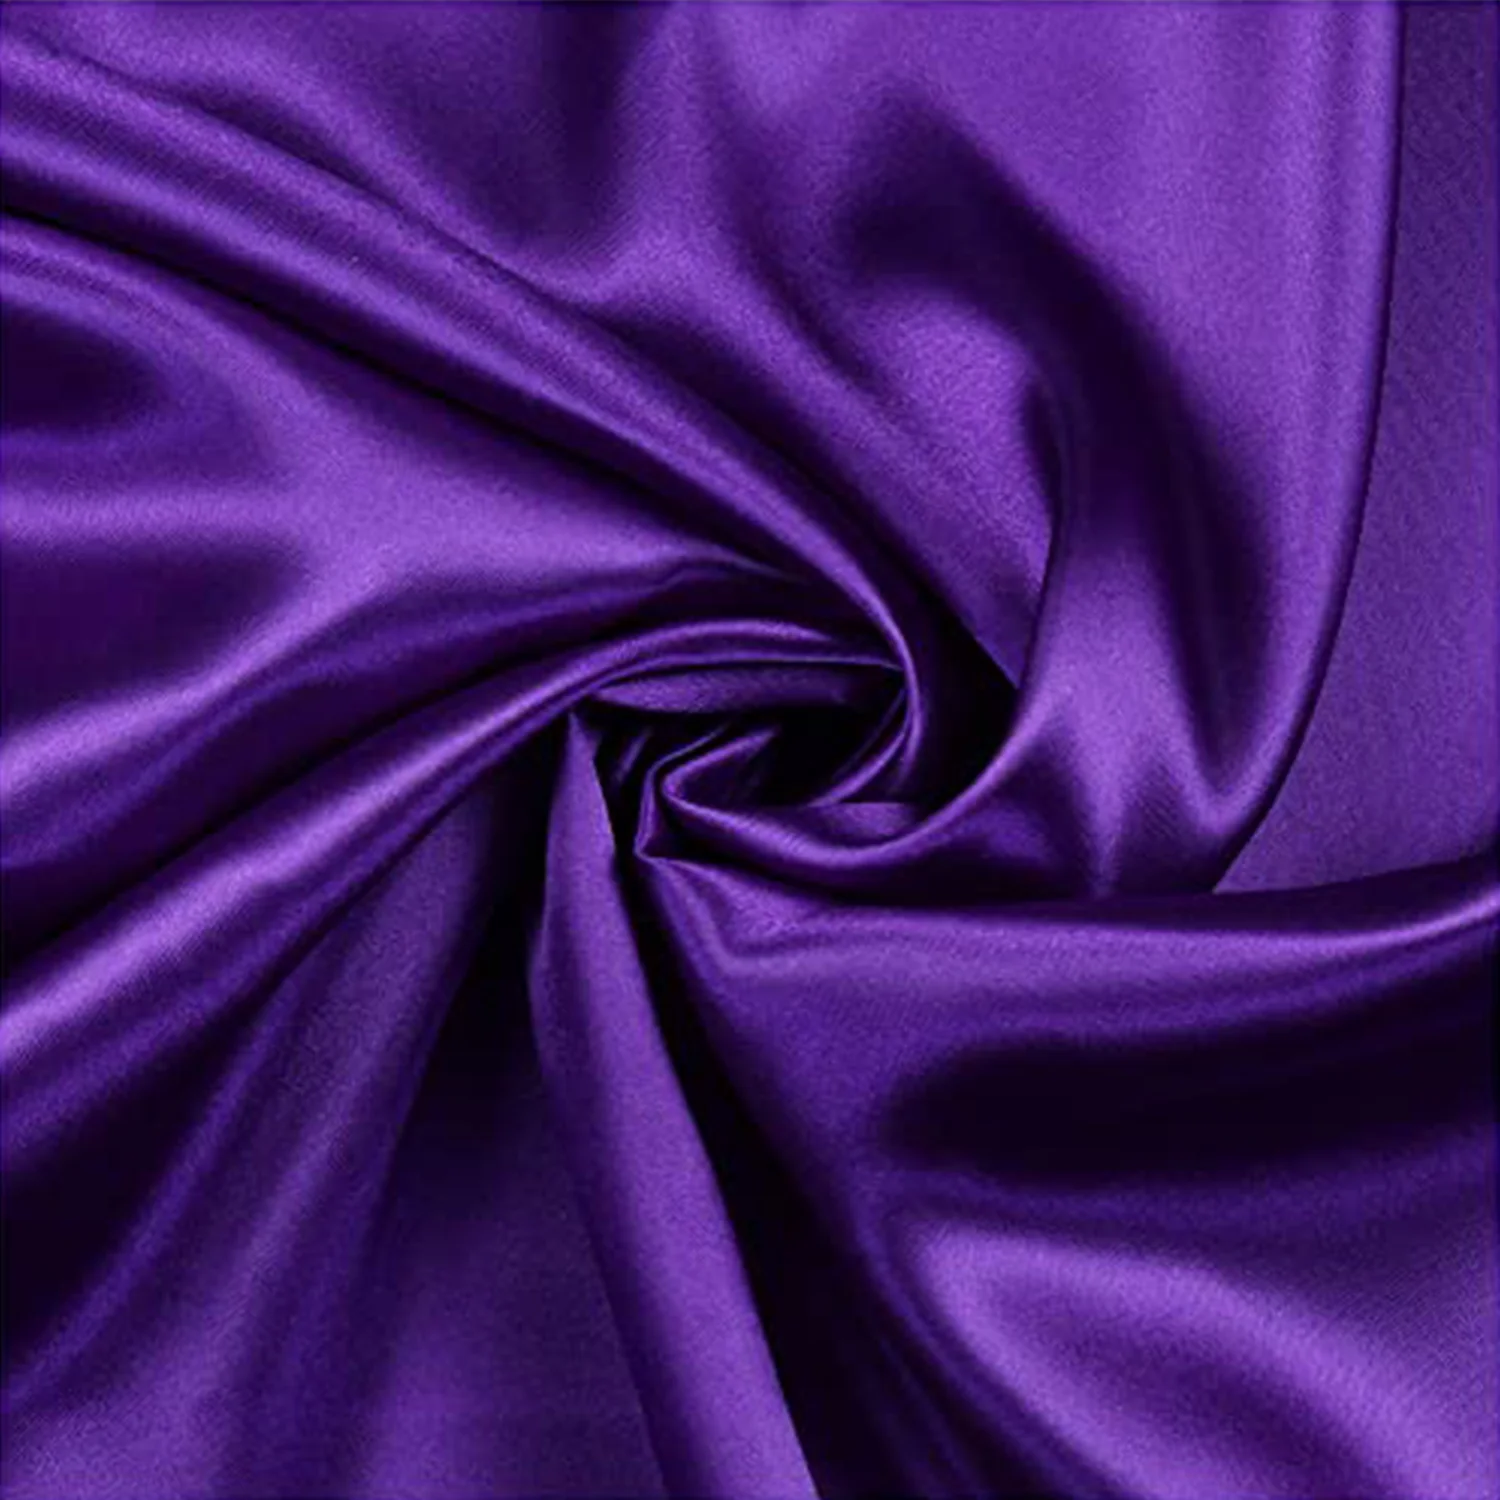 Wensli Customized Floral Printed Ice Tie Dye Satin Silk Fabric 16mm 114cm Heavy 100% Pure Silk Fabric For Dress Pajamas